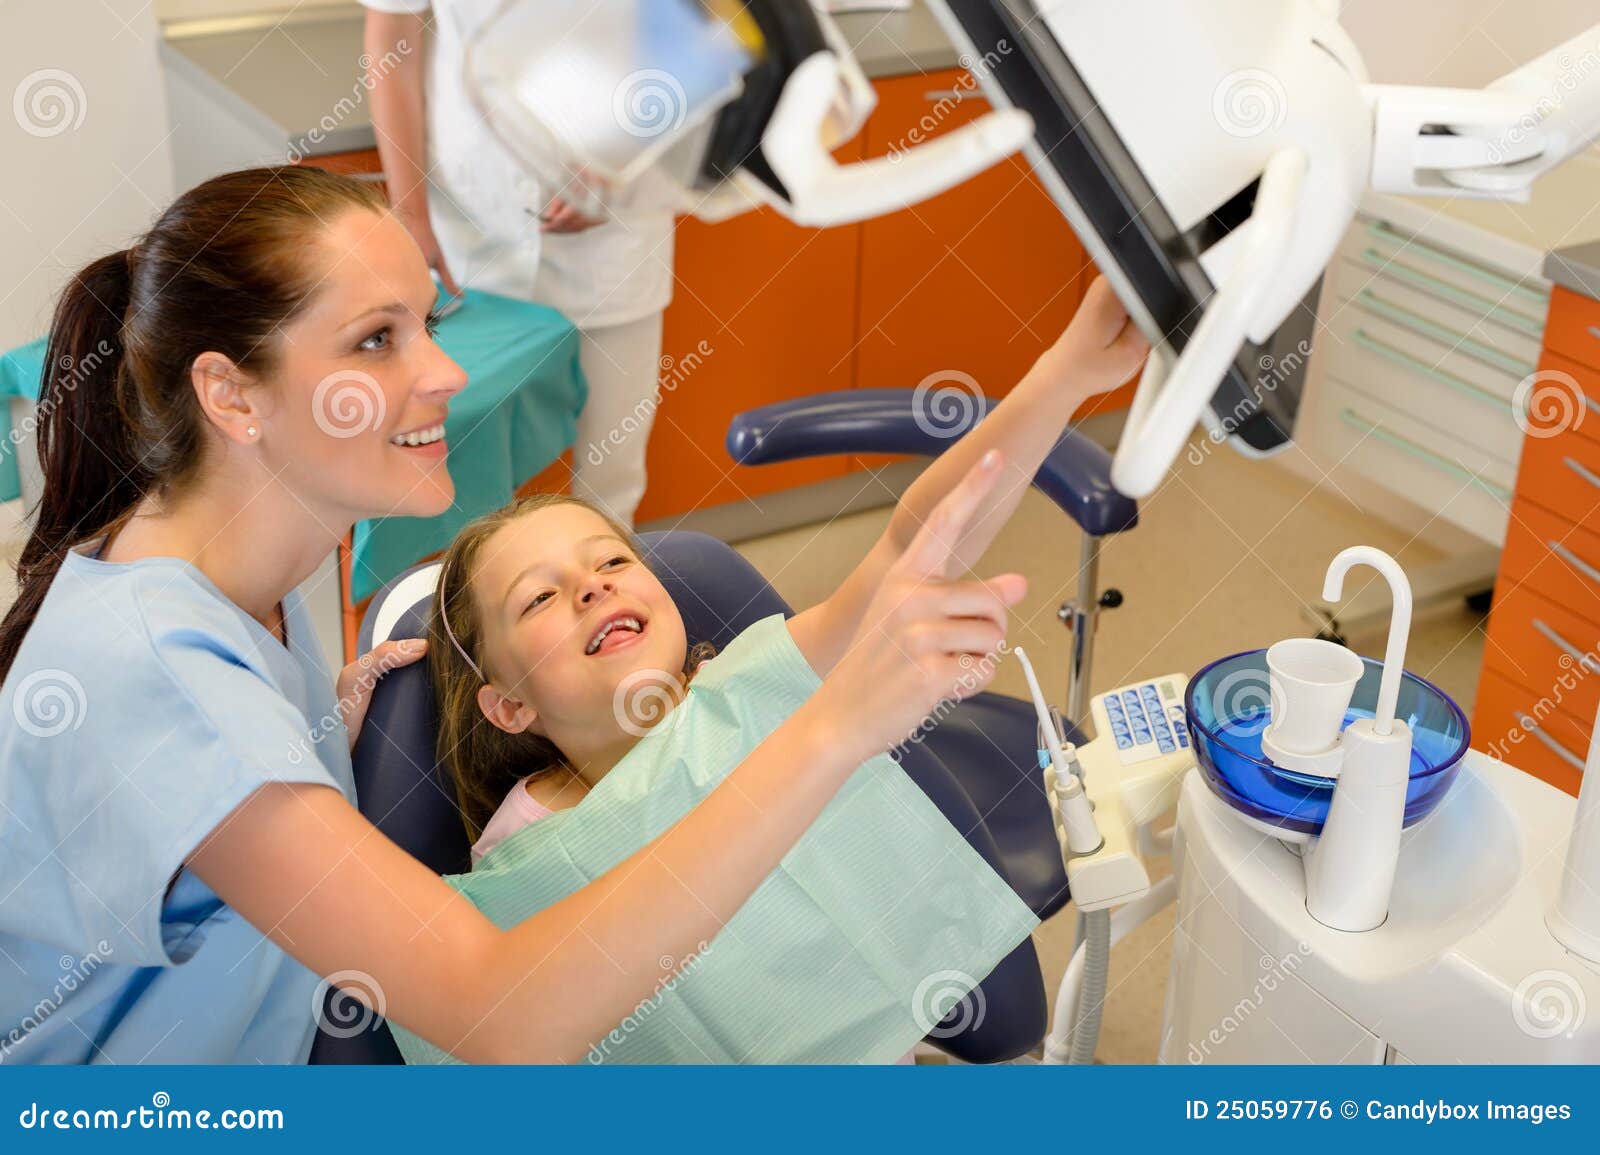 dentist showing child dental procedure on monitor